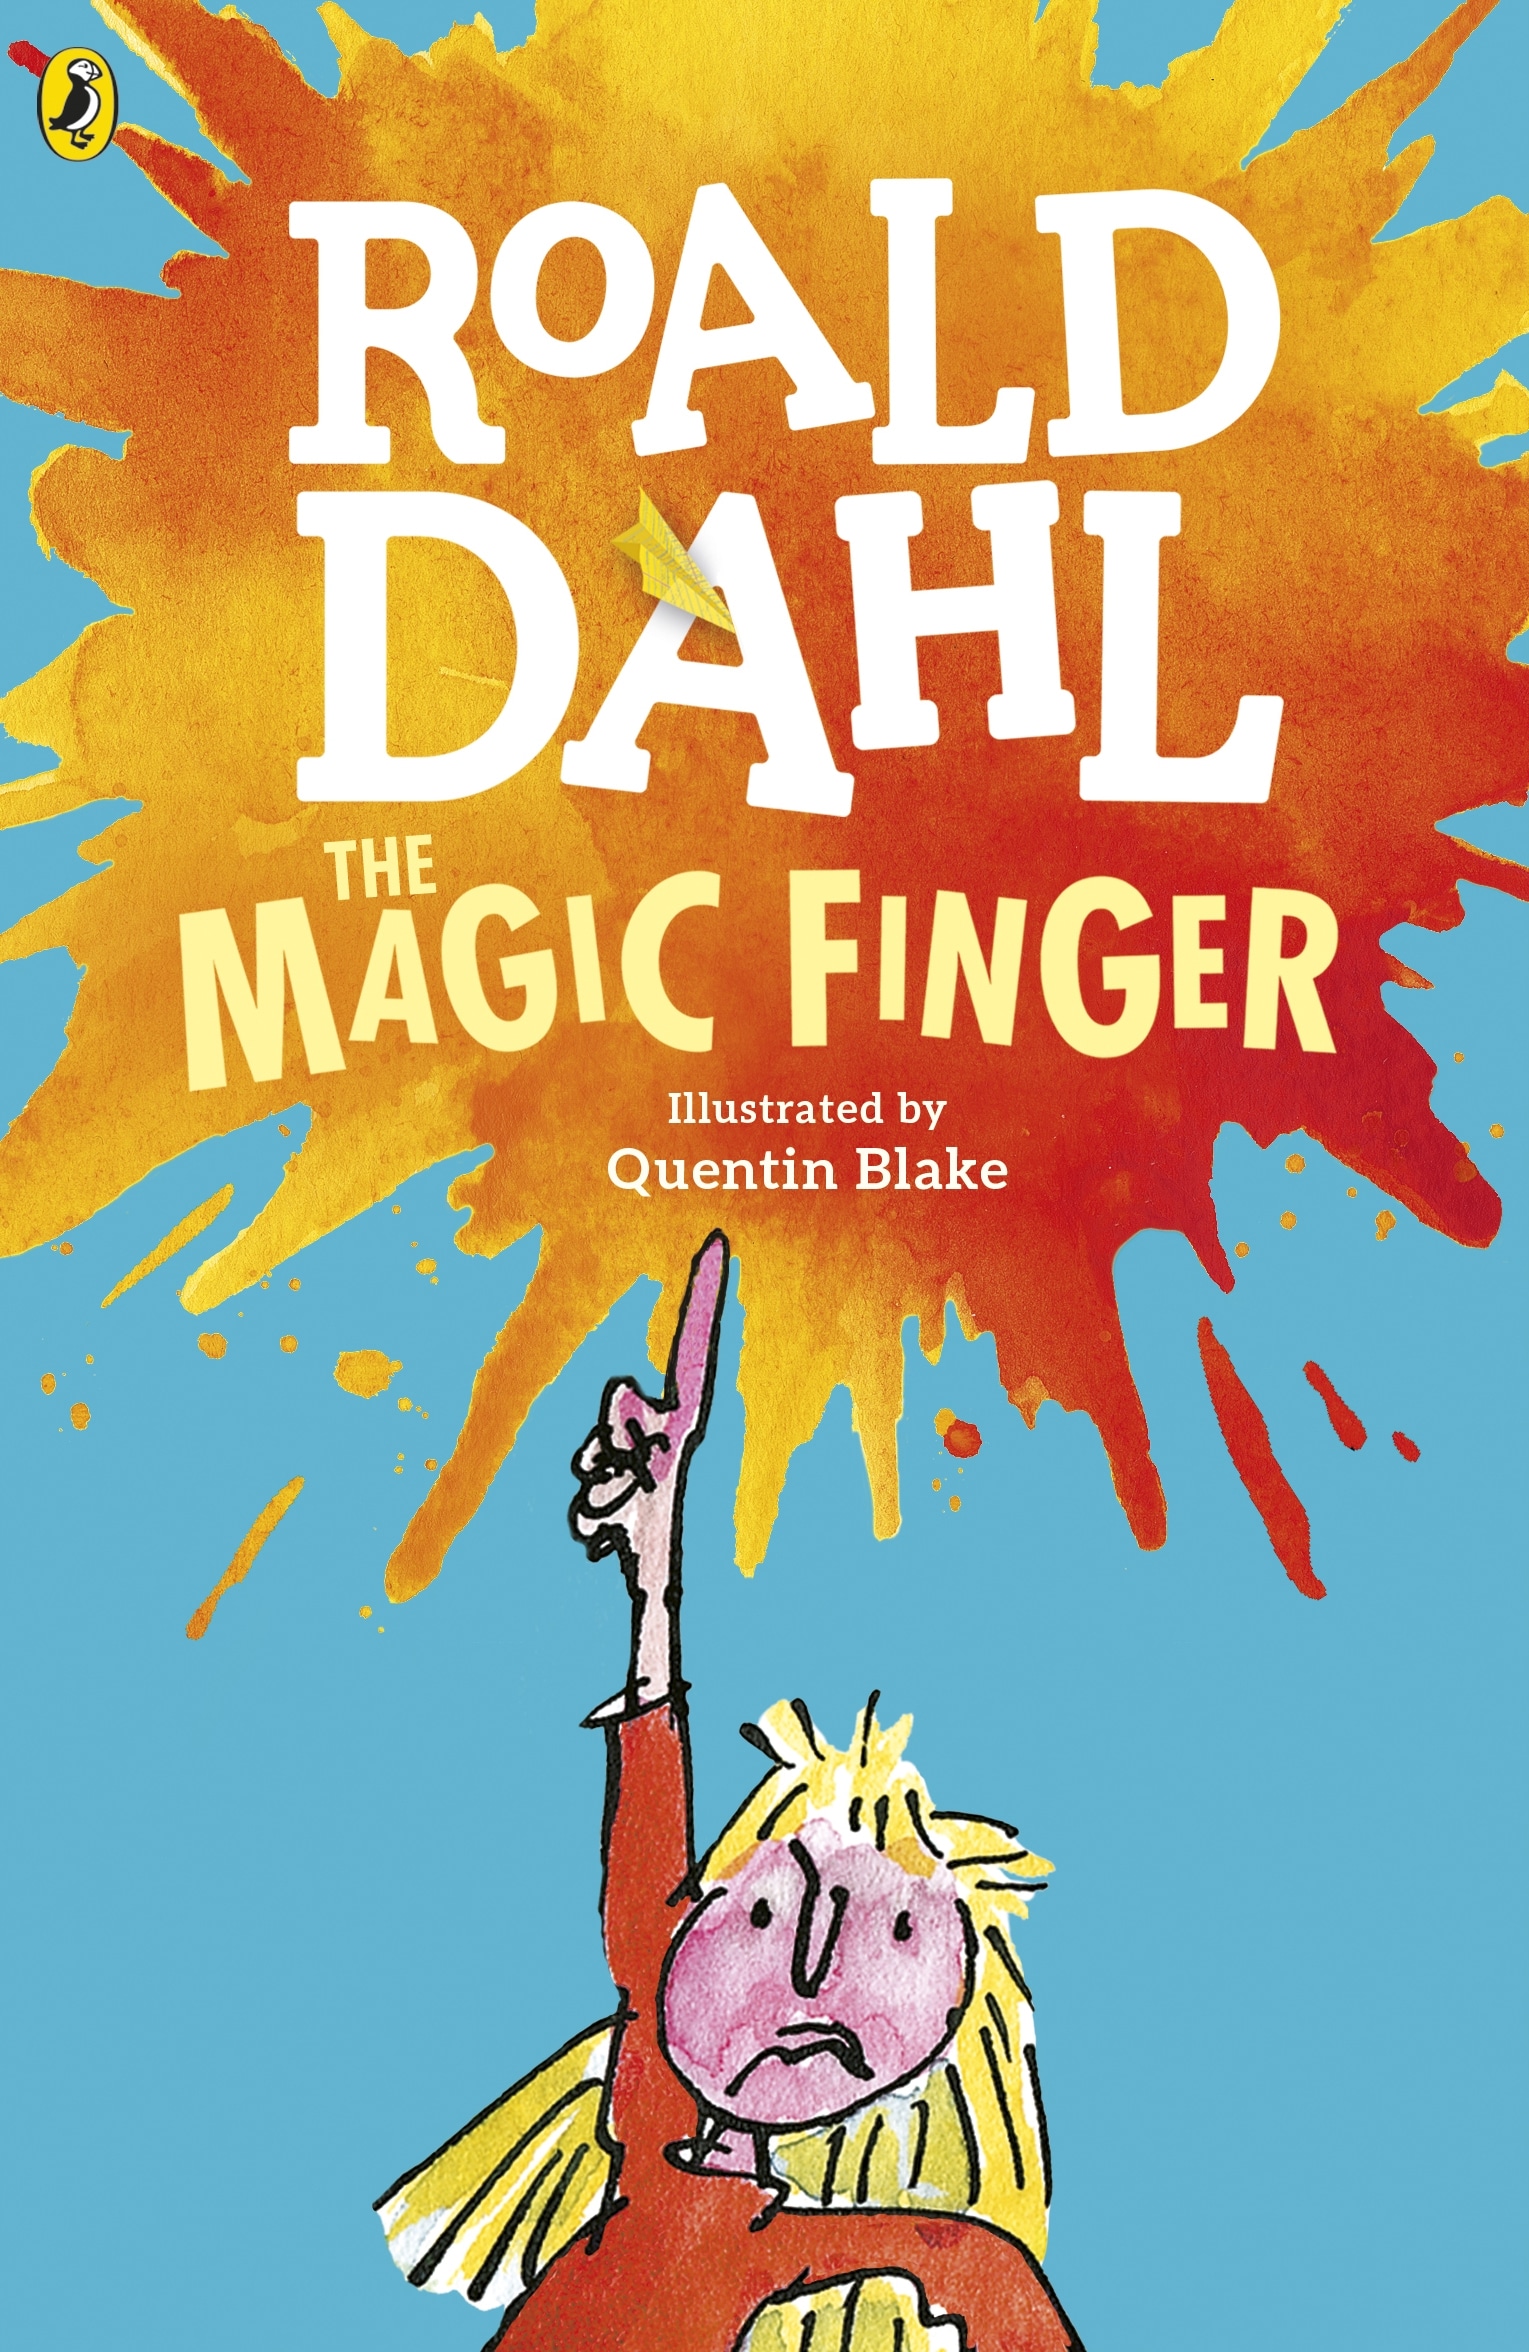 Book “The Magic Finger” by Roald Dahl — February 11, 2016